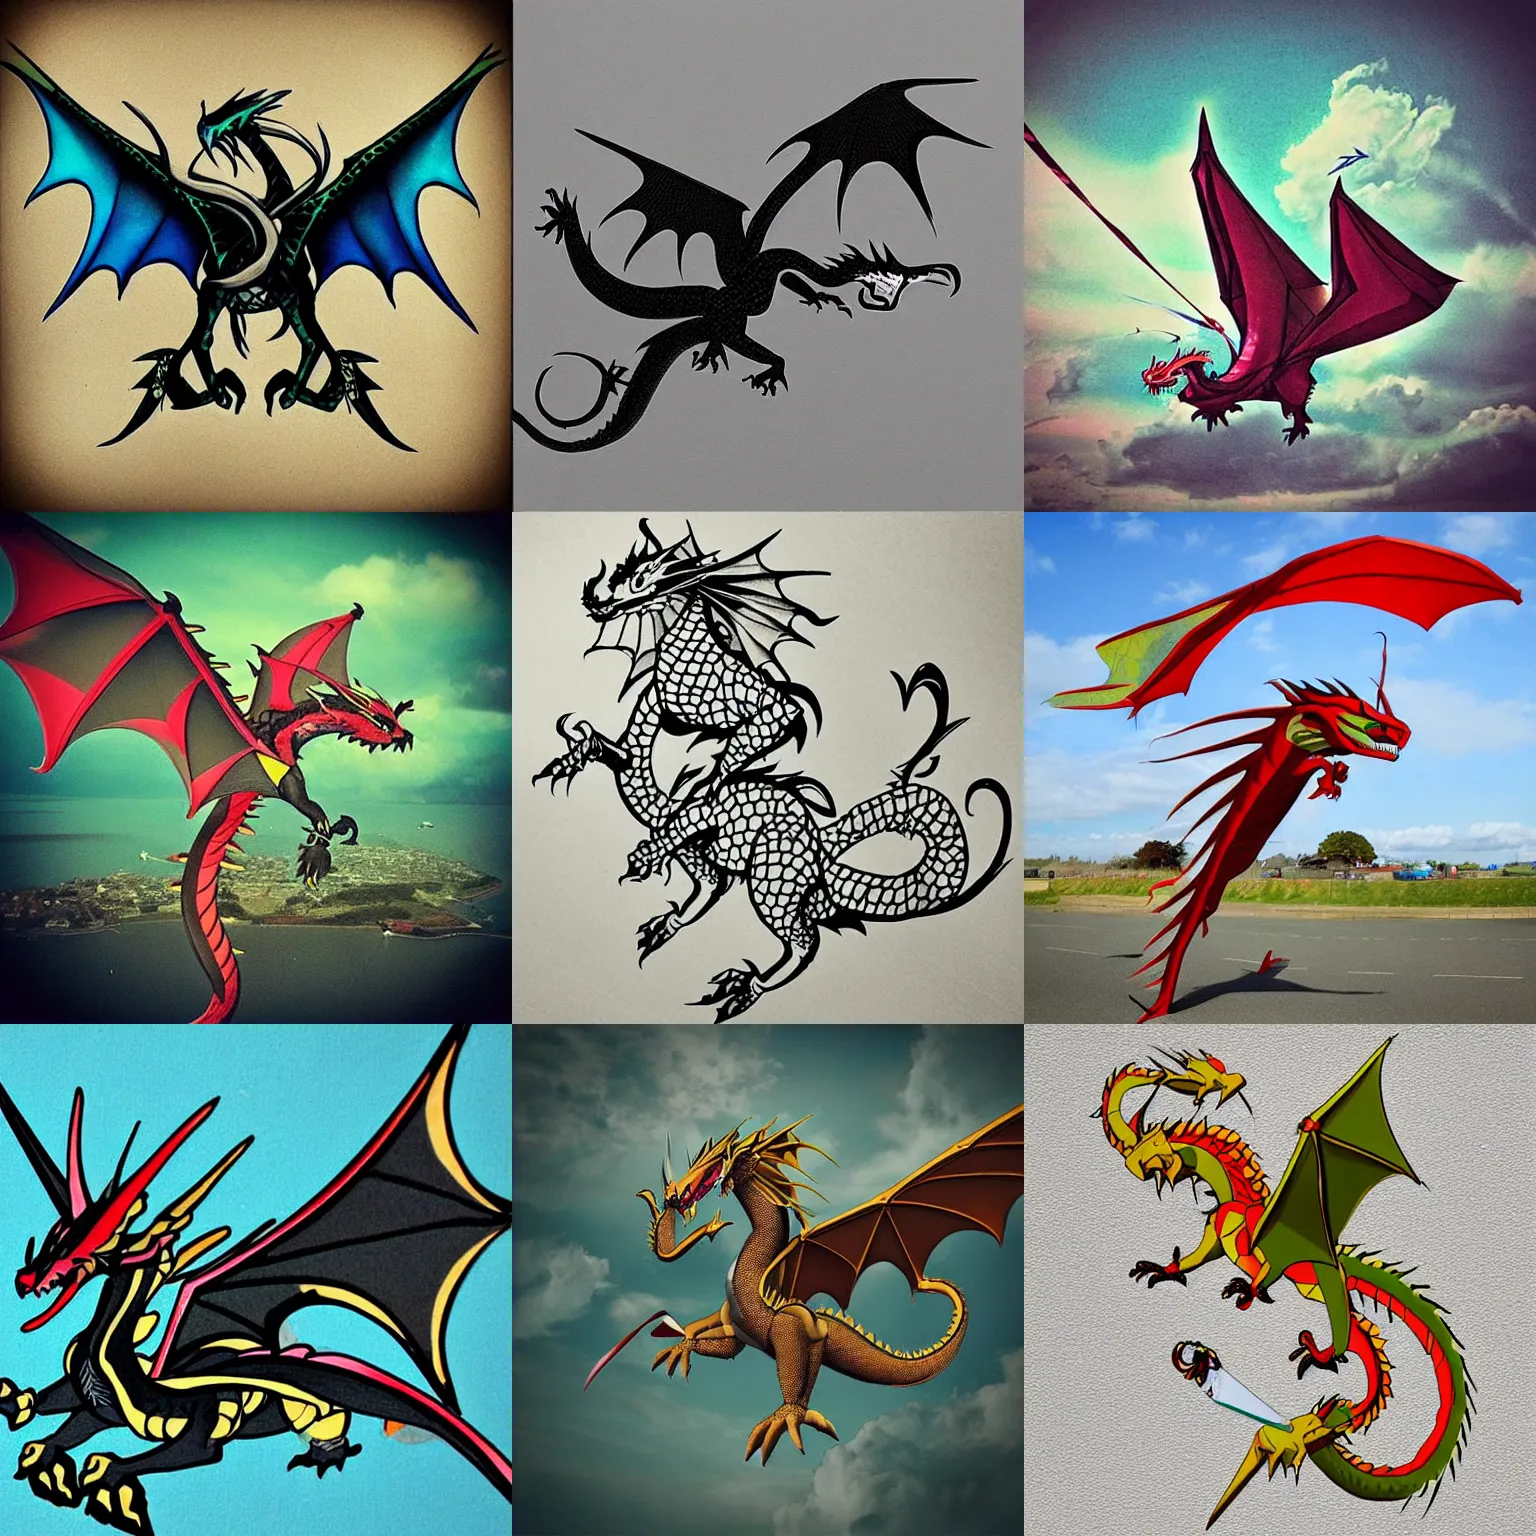 Prompt: “kite dragon”